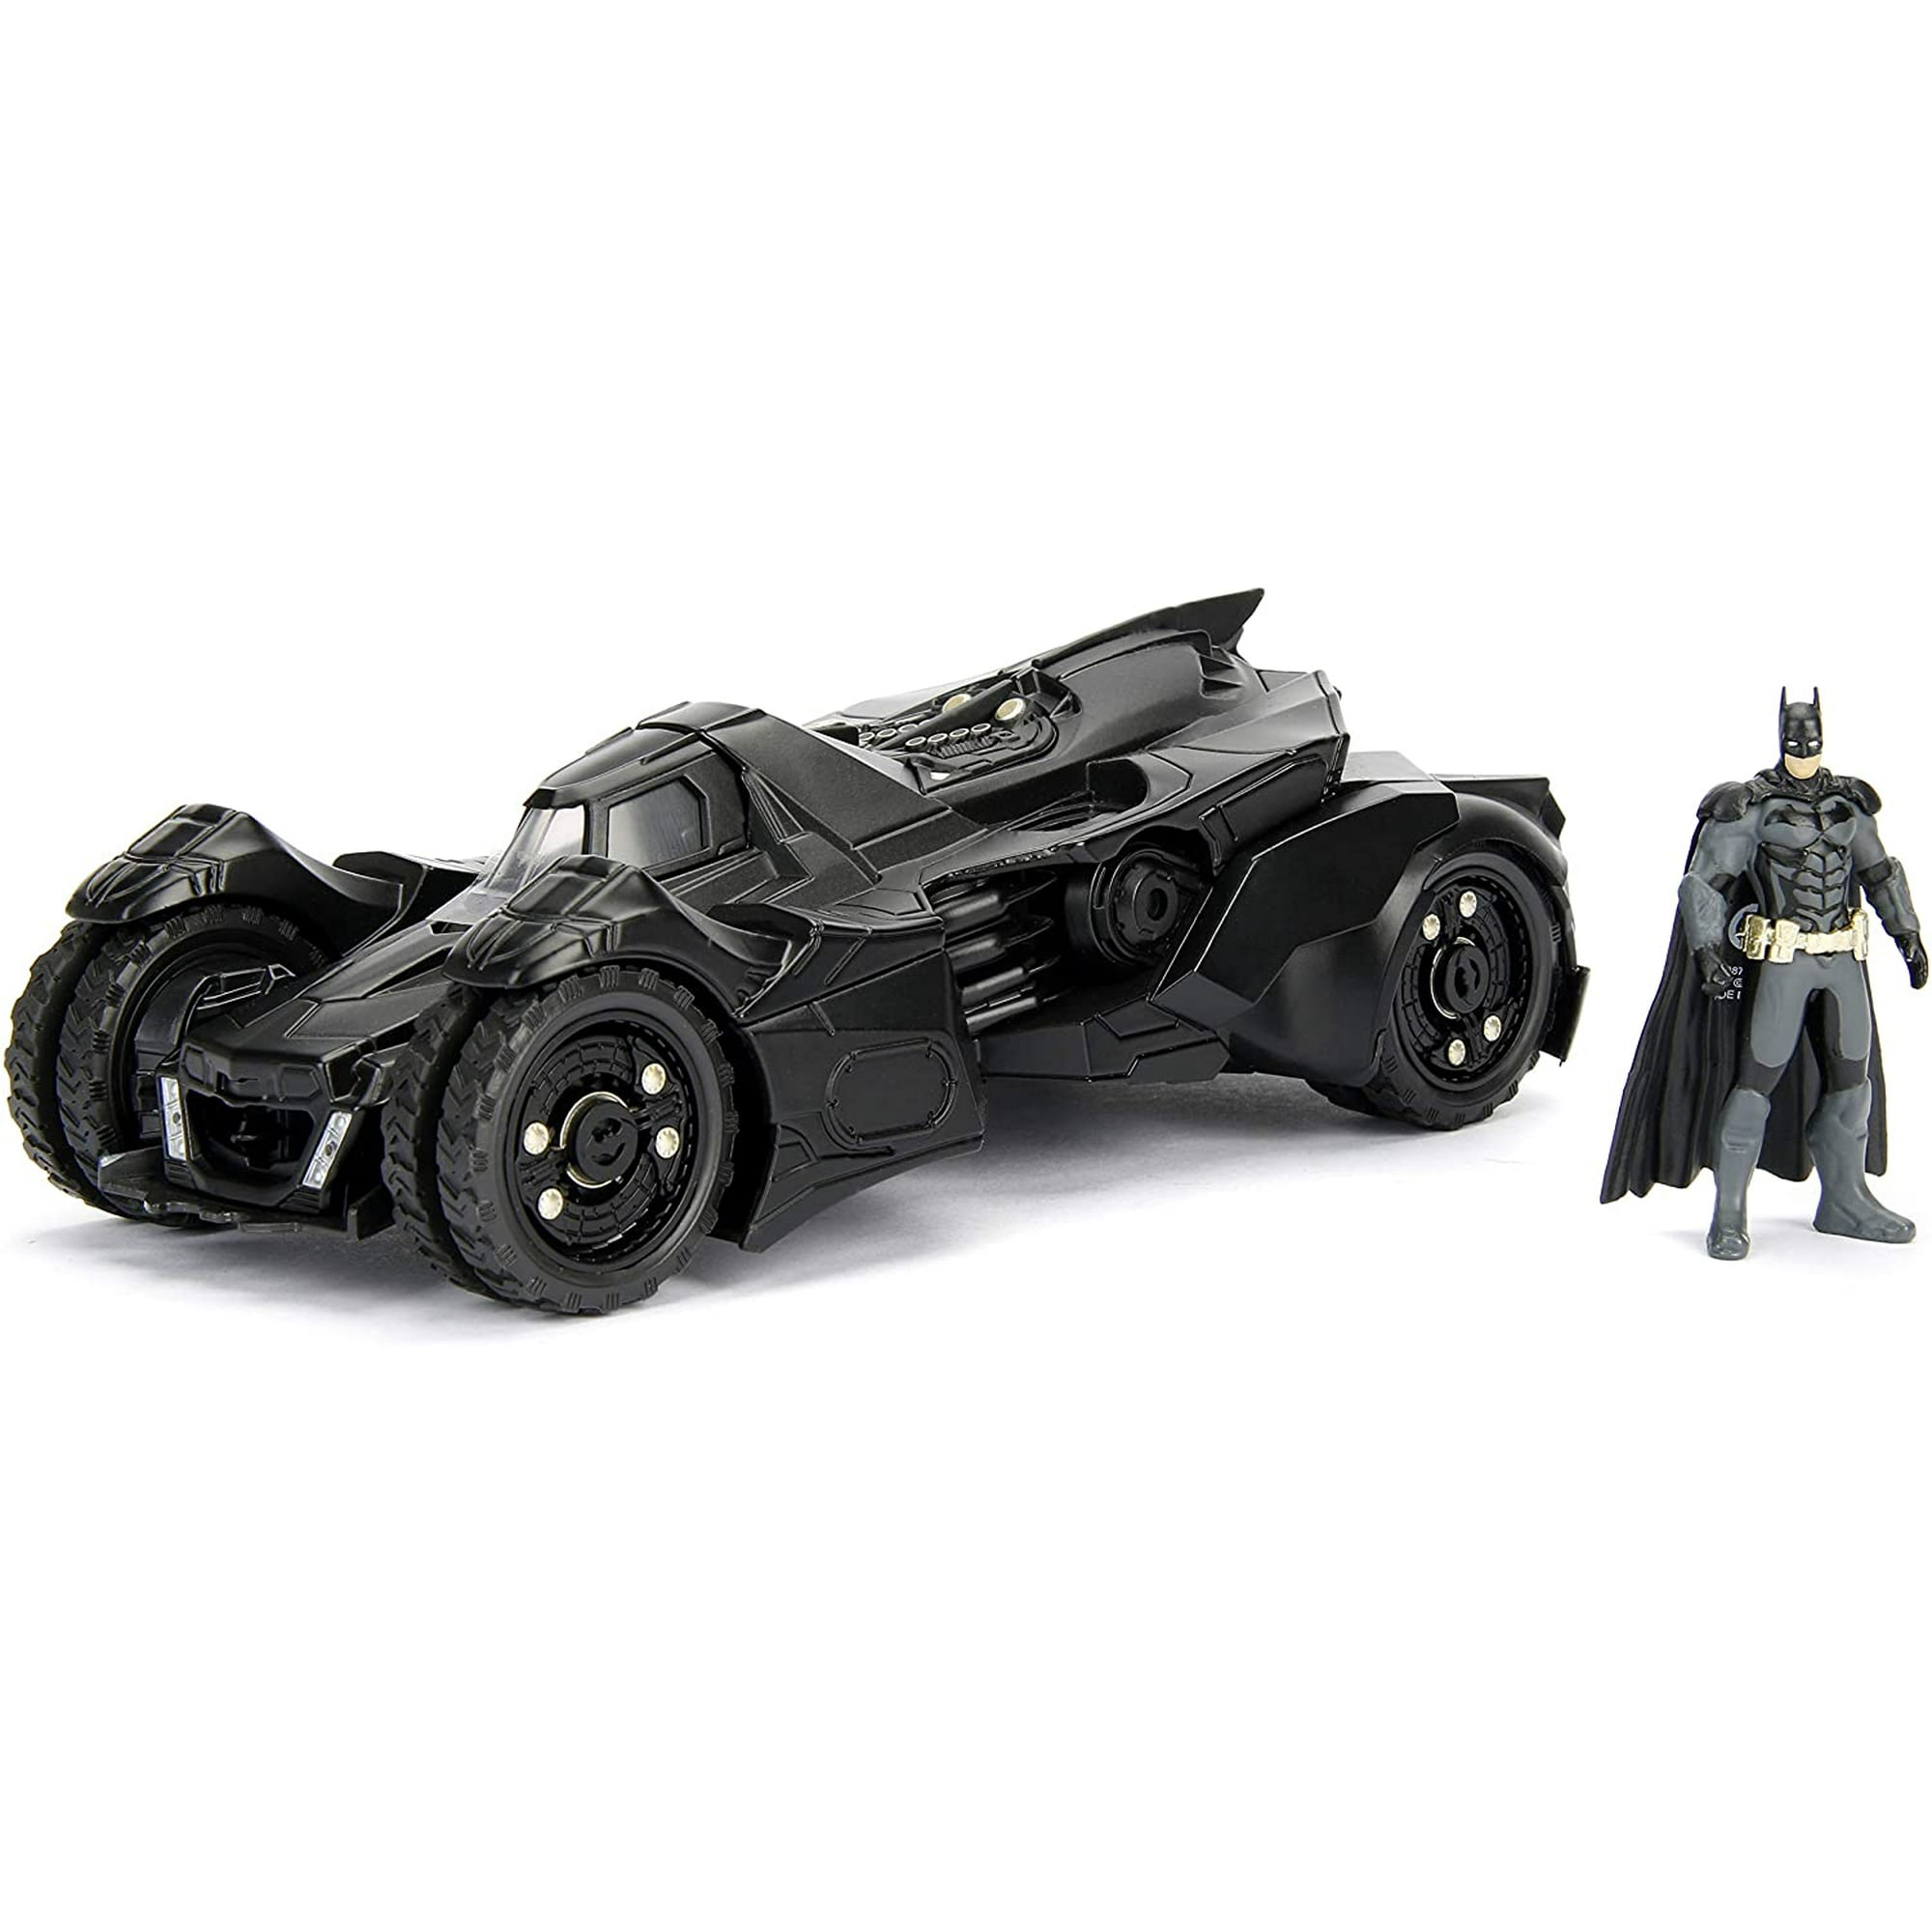 HHHC Batman 2015 Arkham Knight Batmobile & Batman Metals Die-cast  collectible toy vehicle with figure, Black | Walmart Canada